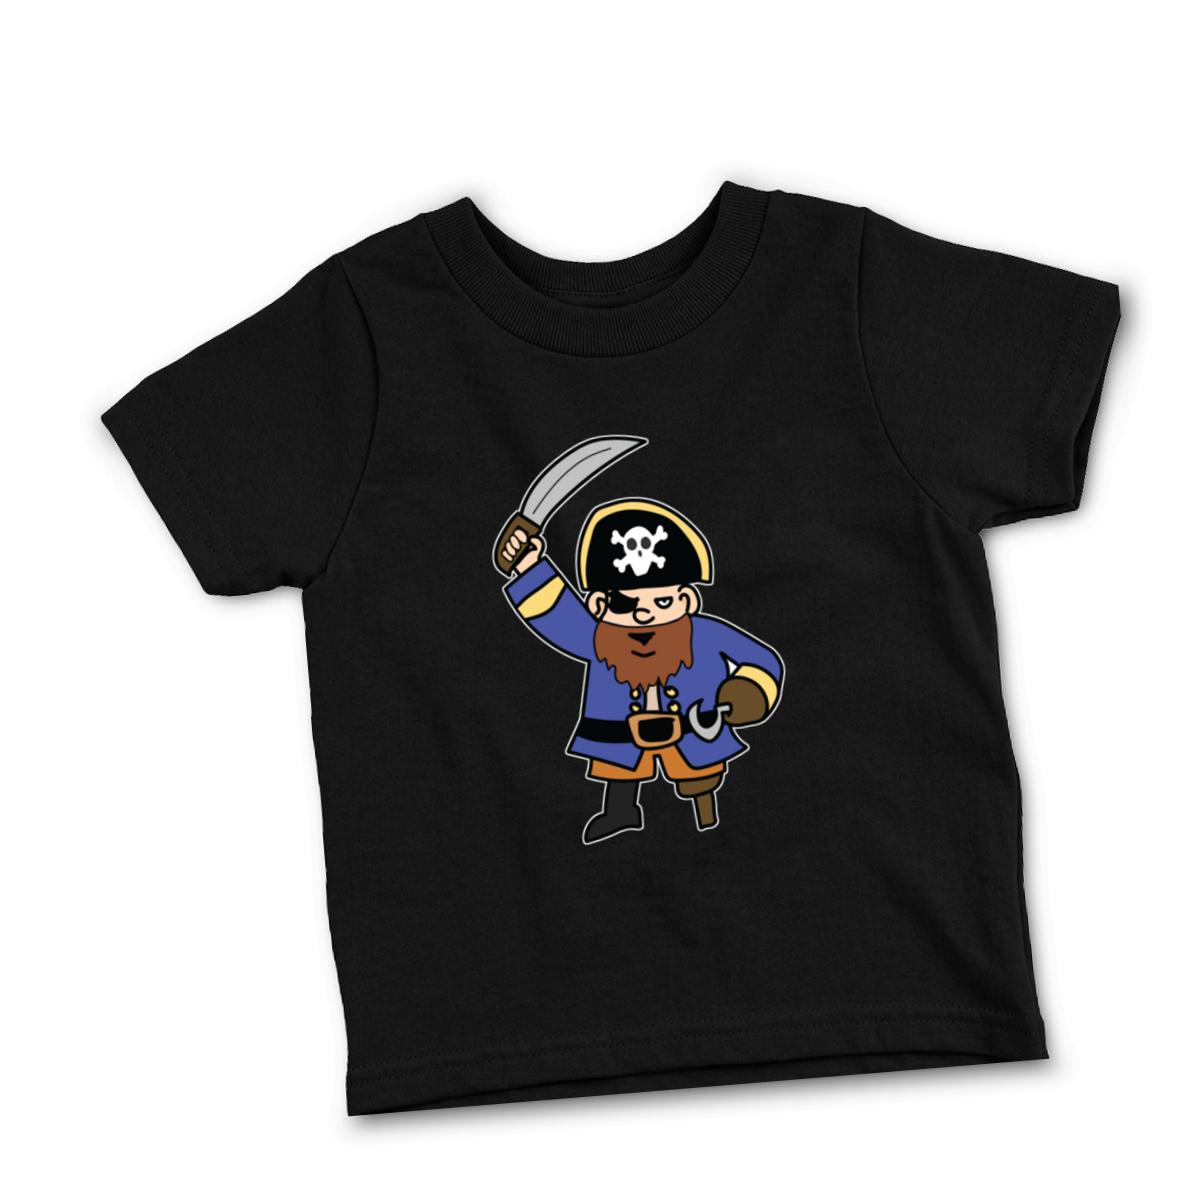 Pirate Infant Tee 24M black